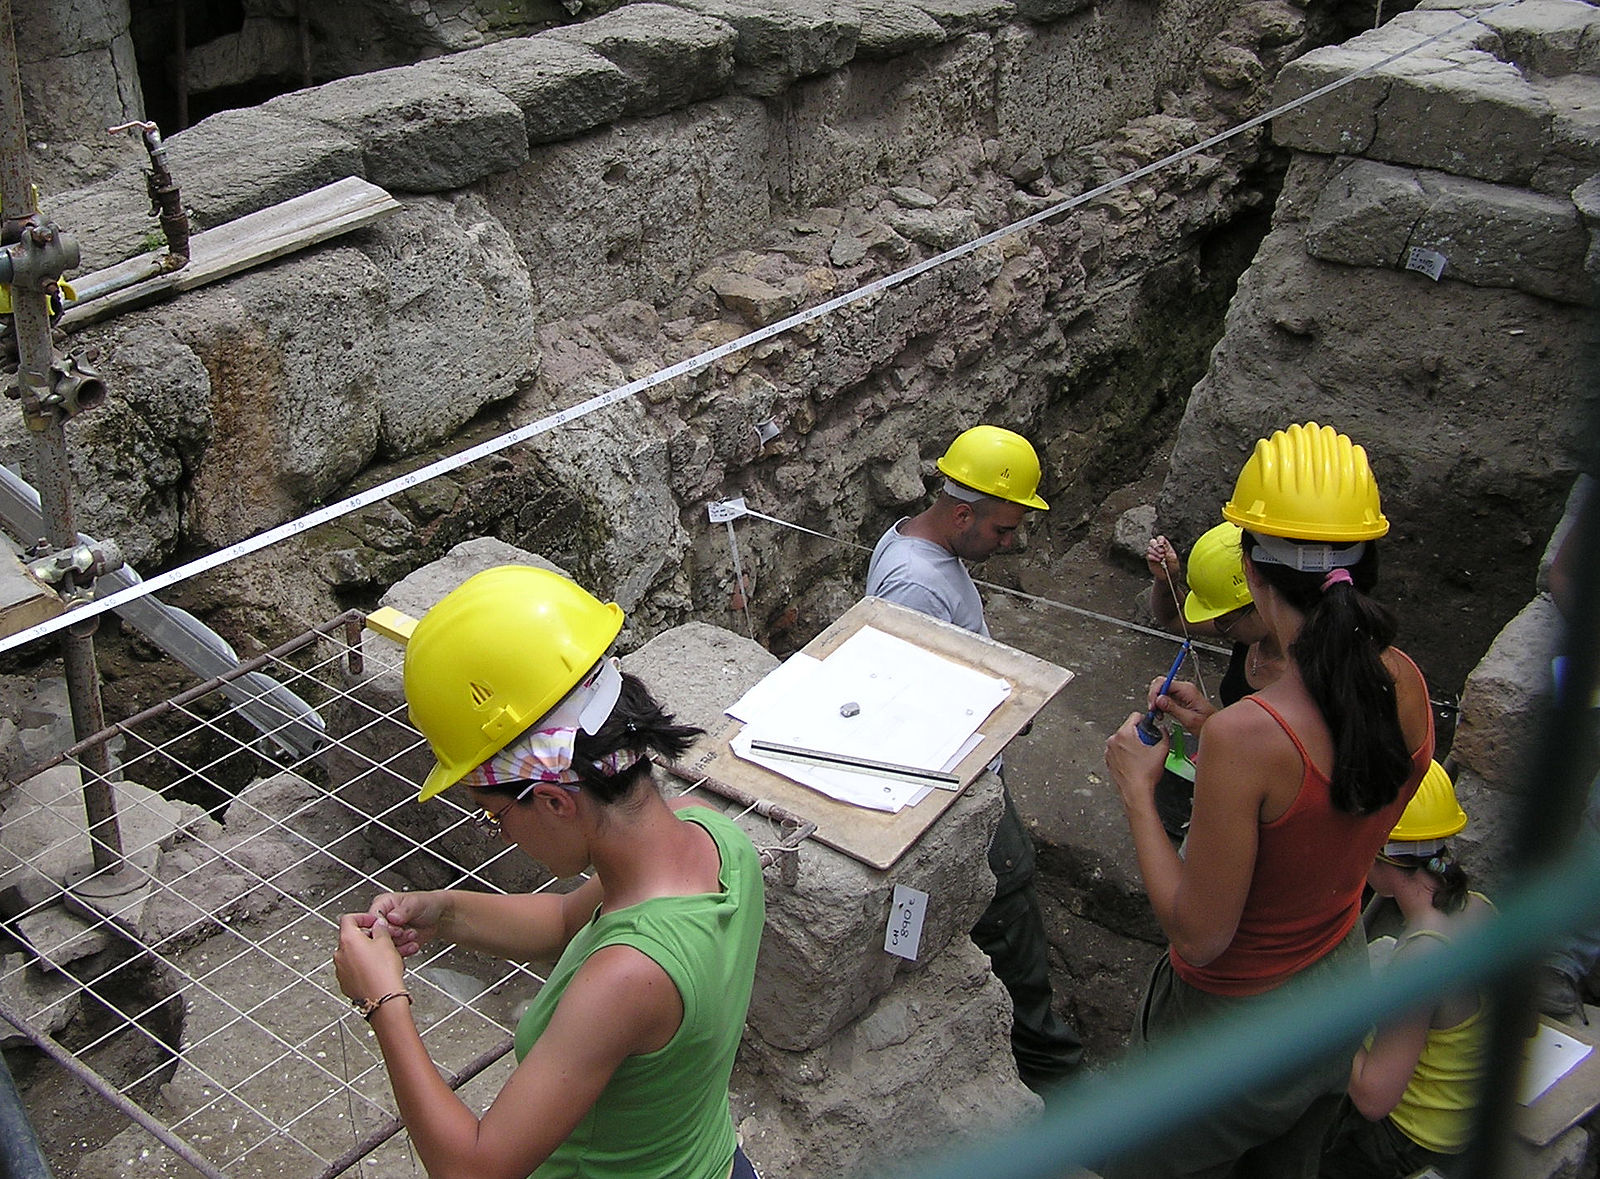 Excavations on the roman forum in Italy